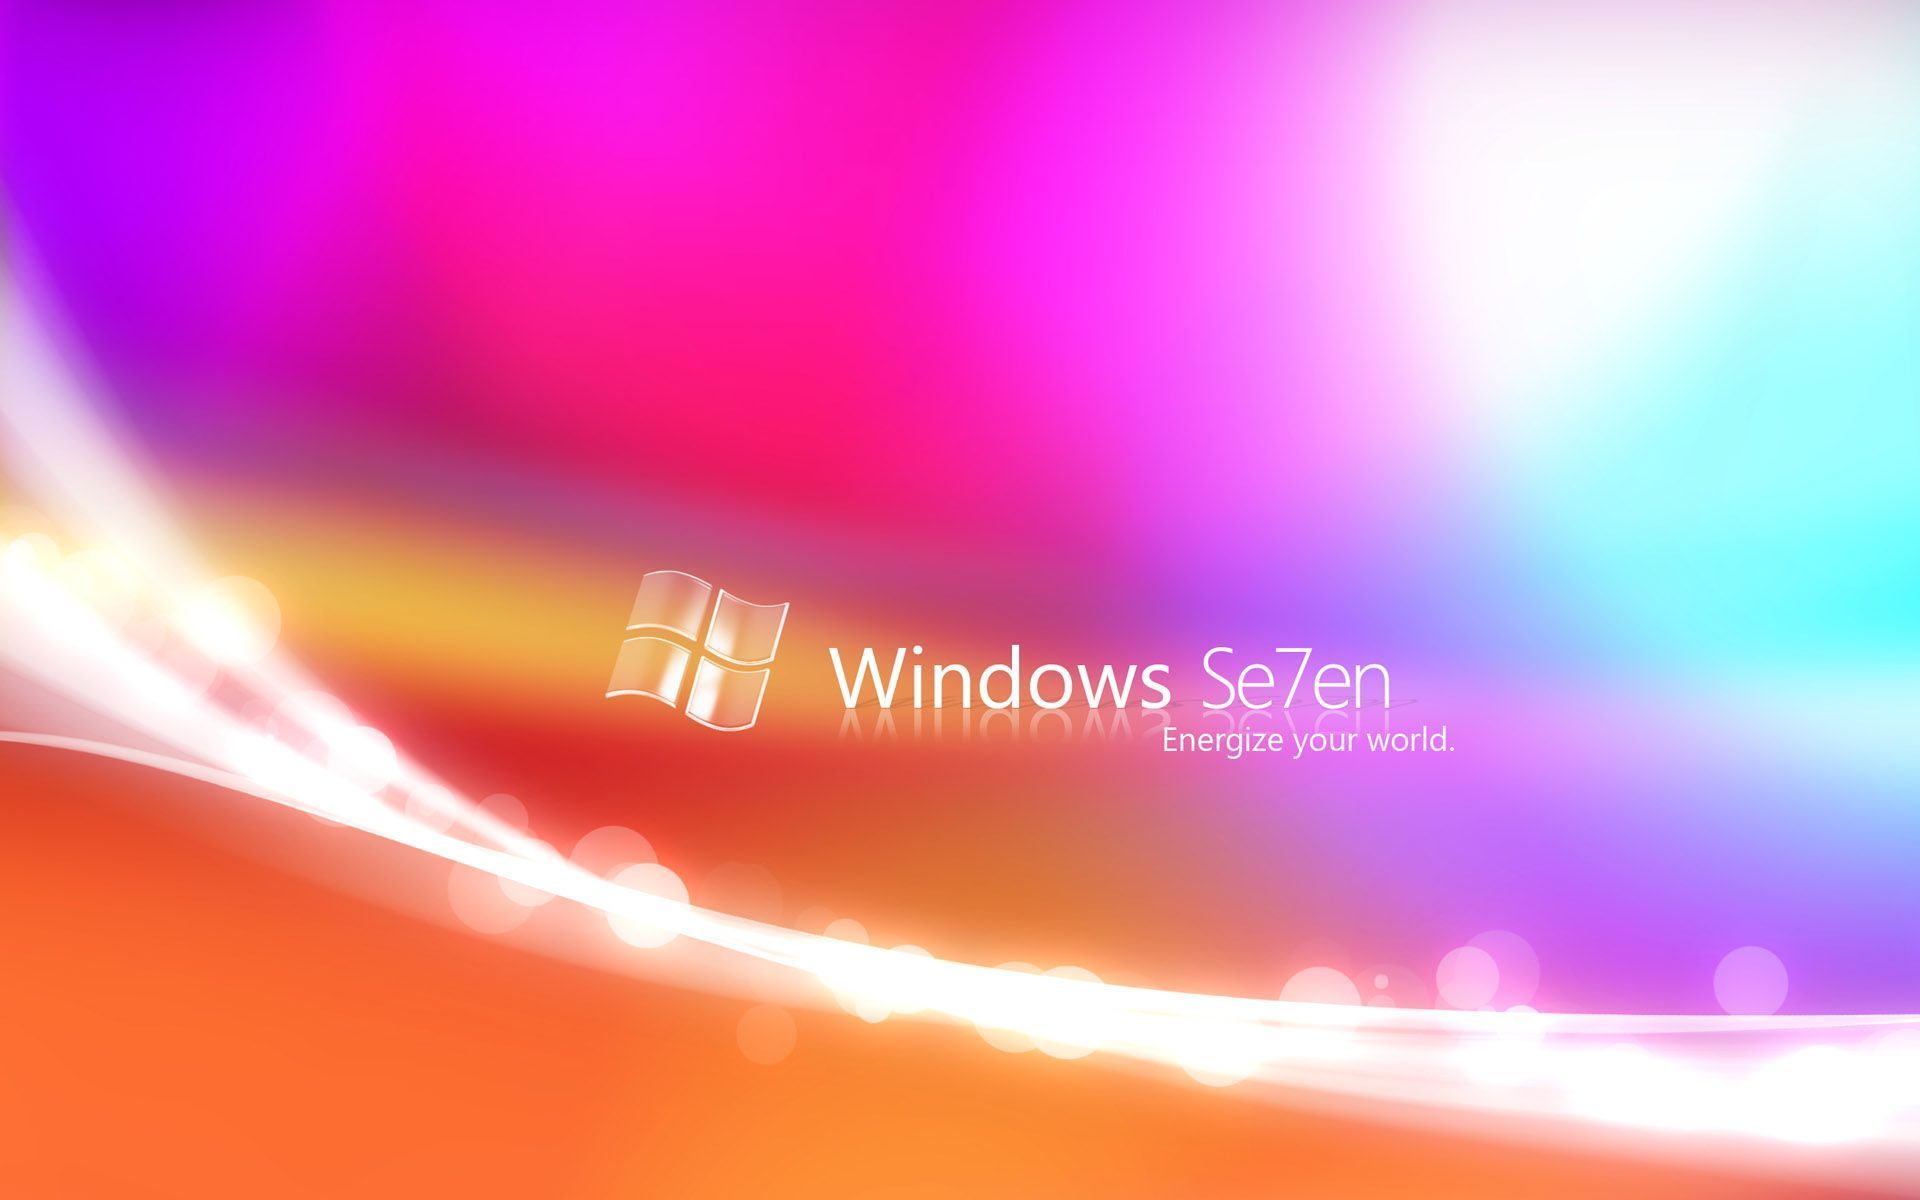 Windows 7 Original Wallpapers HD Backgrounds